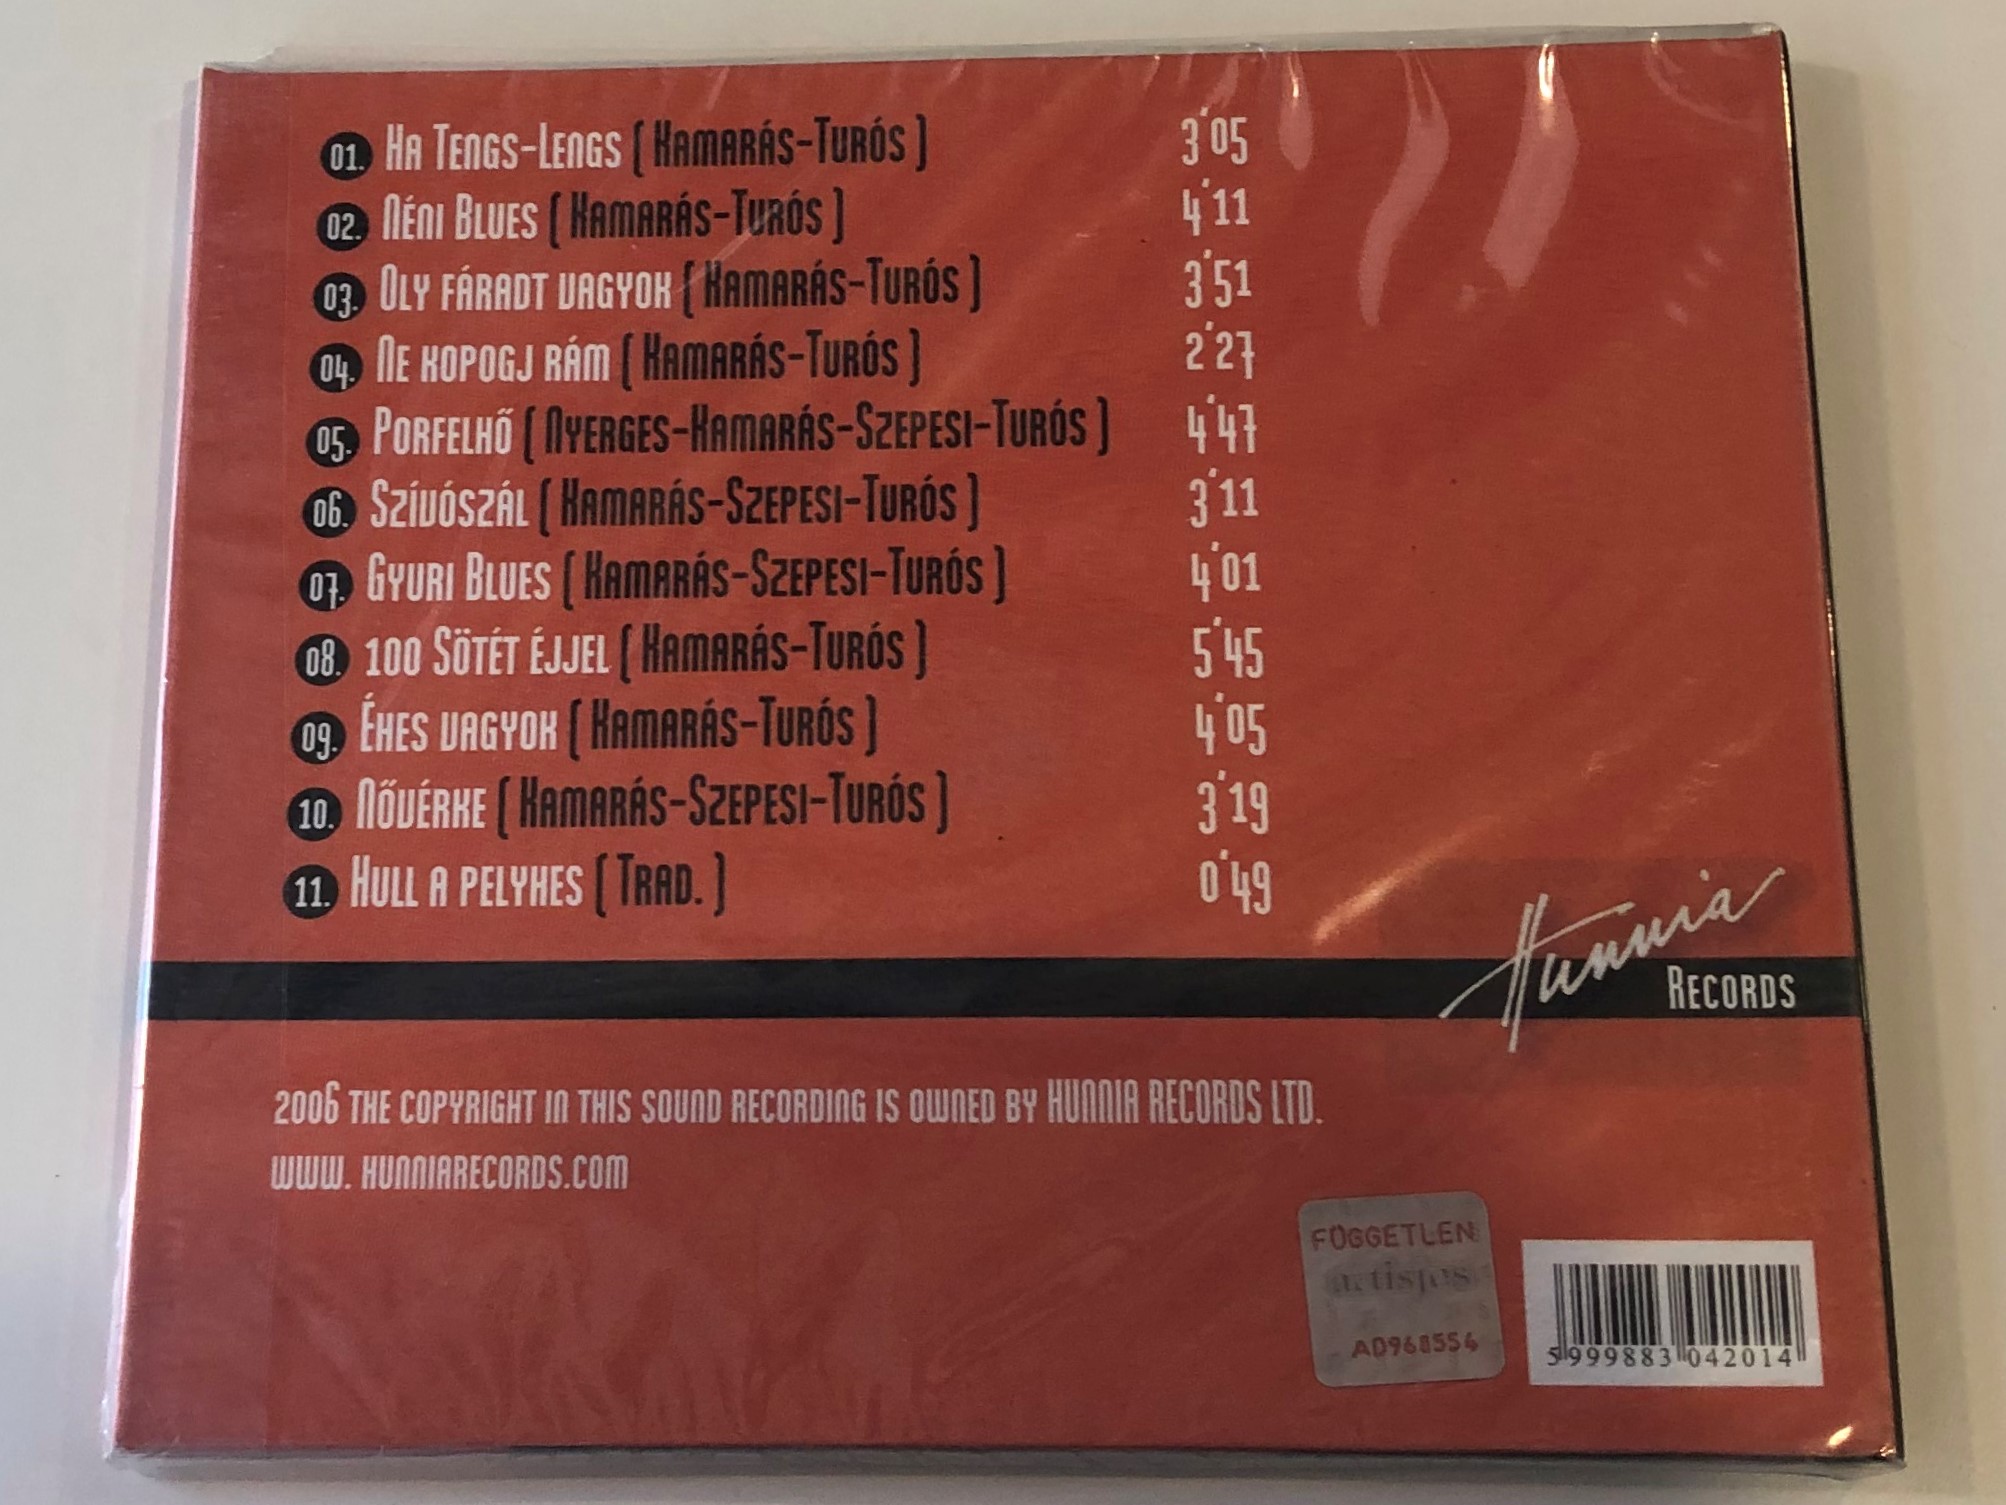 tengs-lengs-hunnia-records-audio-cd-2006-5999883042014-2-.jpg